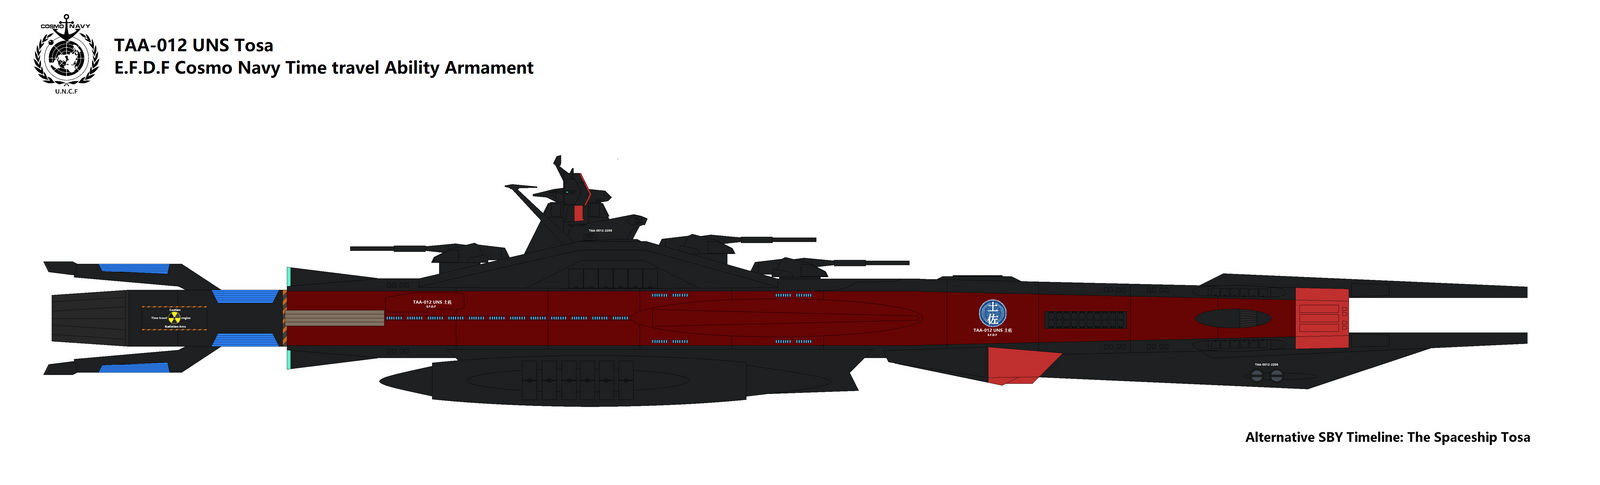 Wikira Battleship by NikitaShadow on DeviantArt